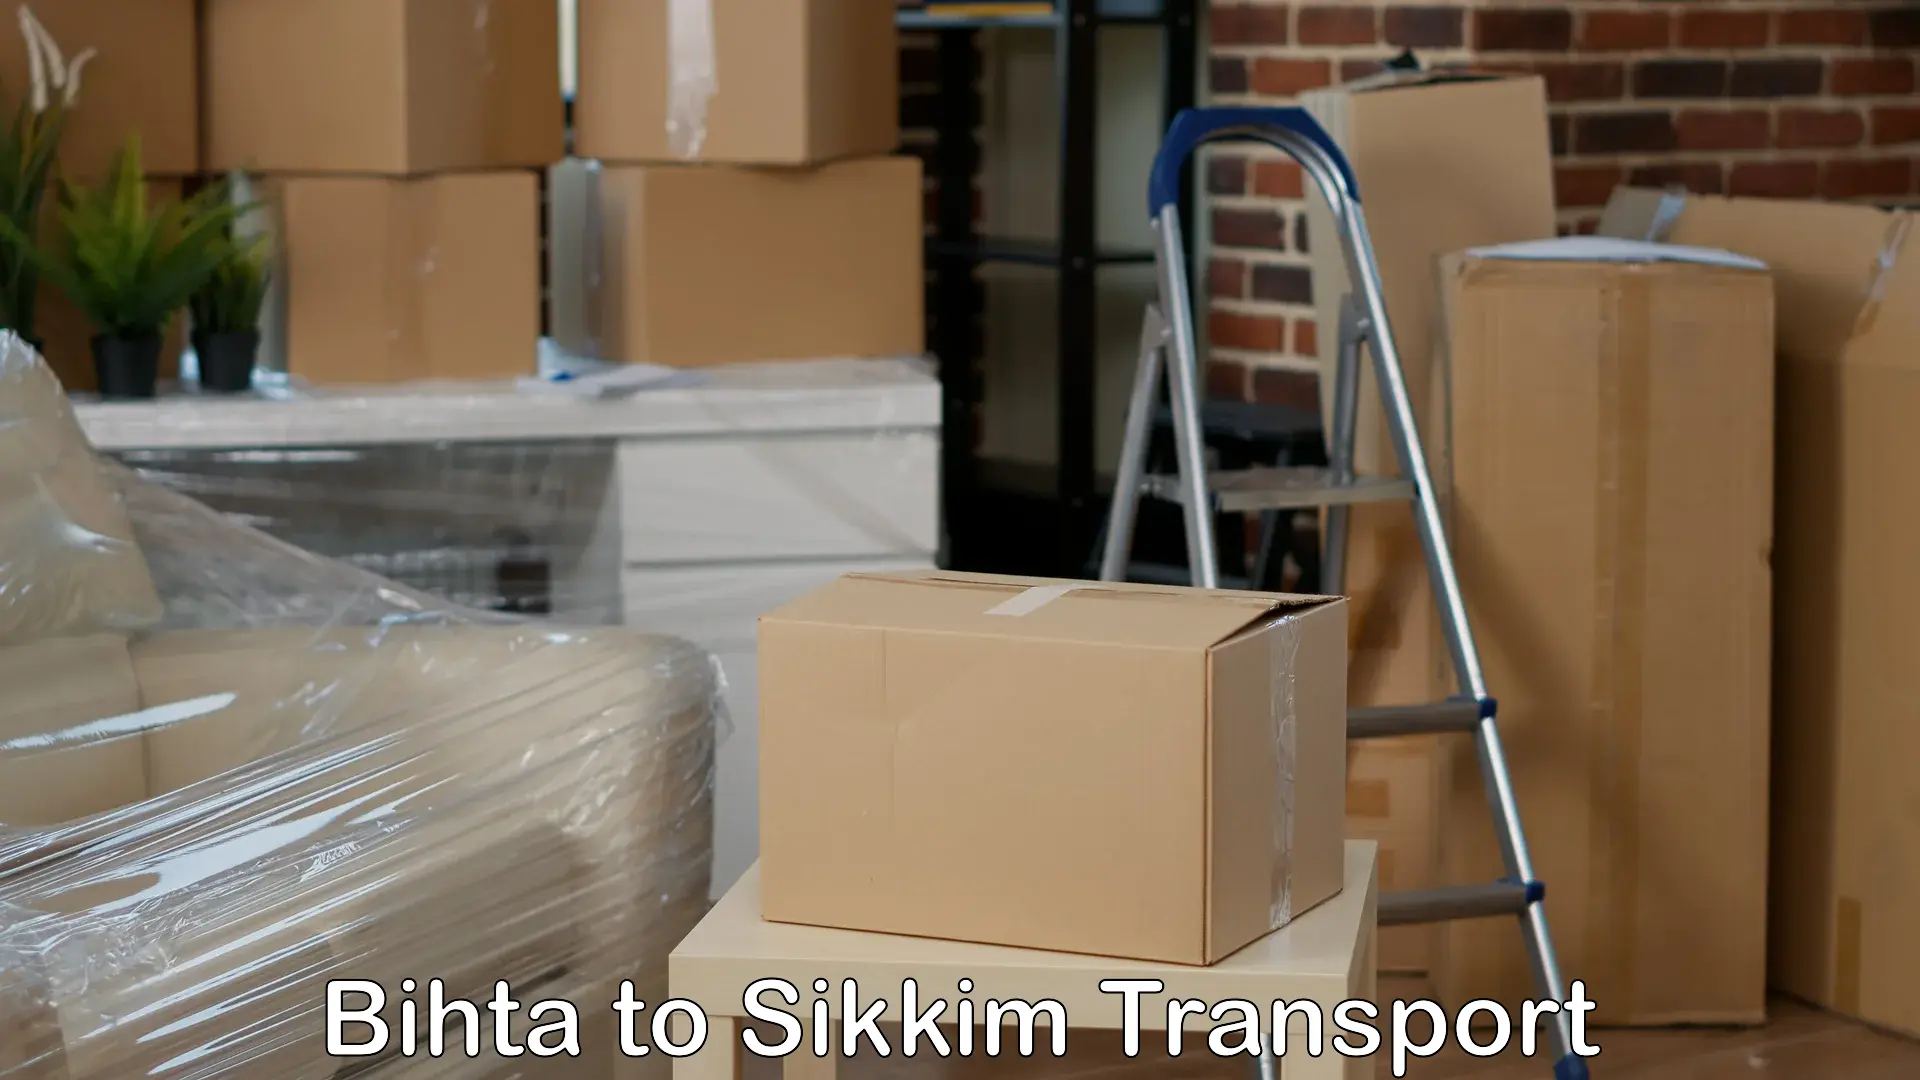 Pick up transport service Bihta to South Sikkim